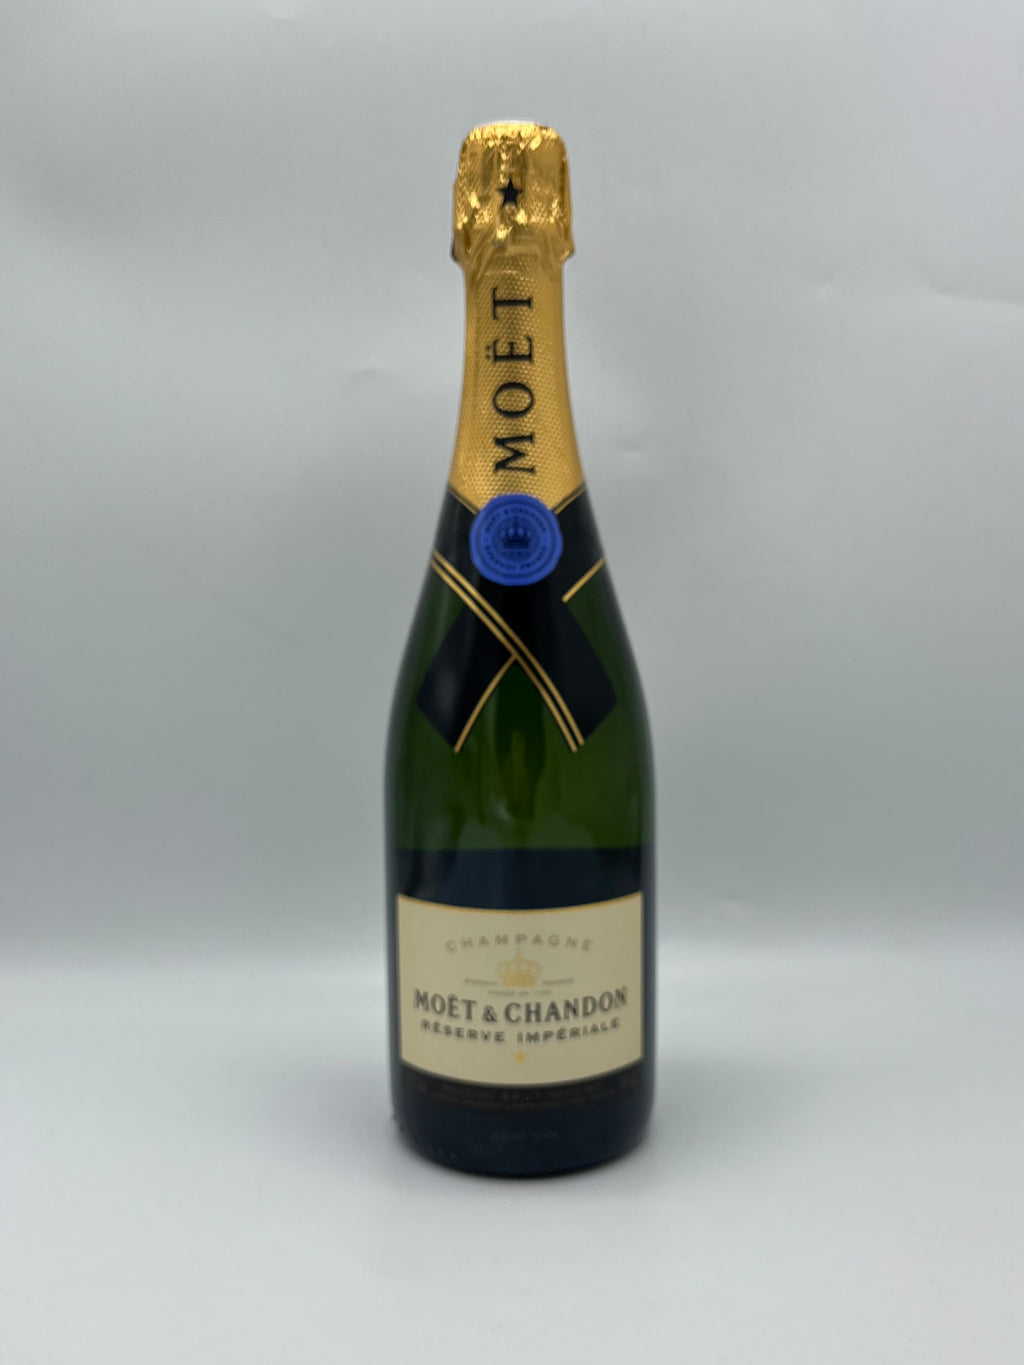 Champagne "Reserve Imperiale" - Moët & Chandon